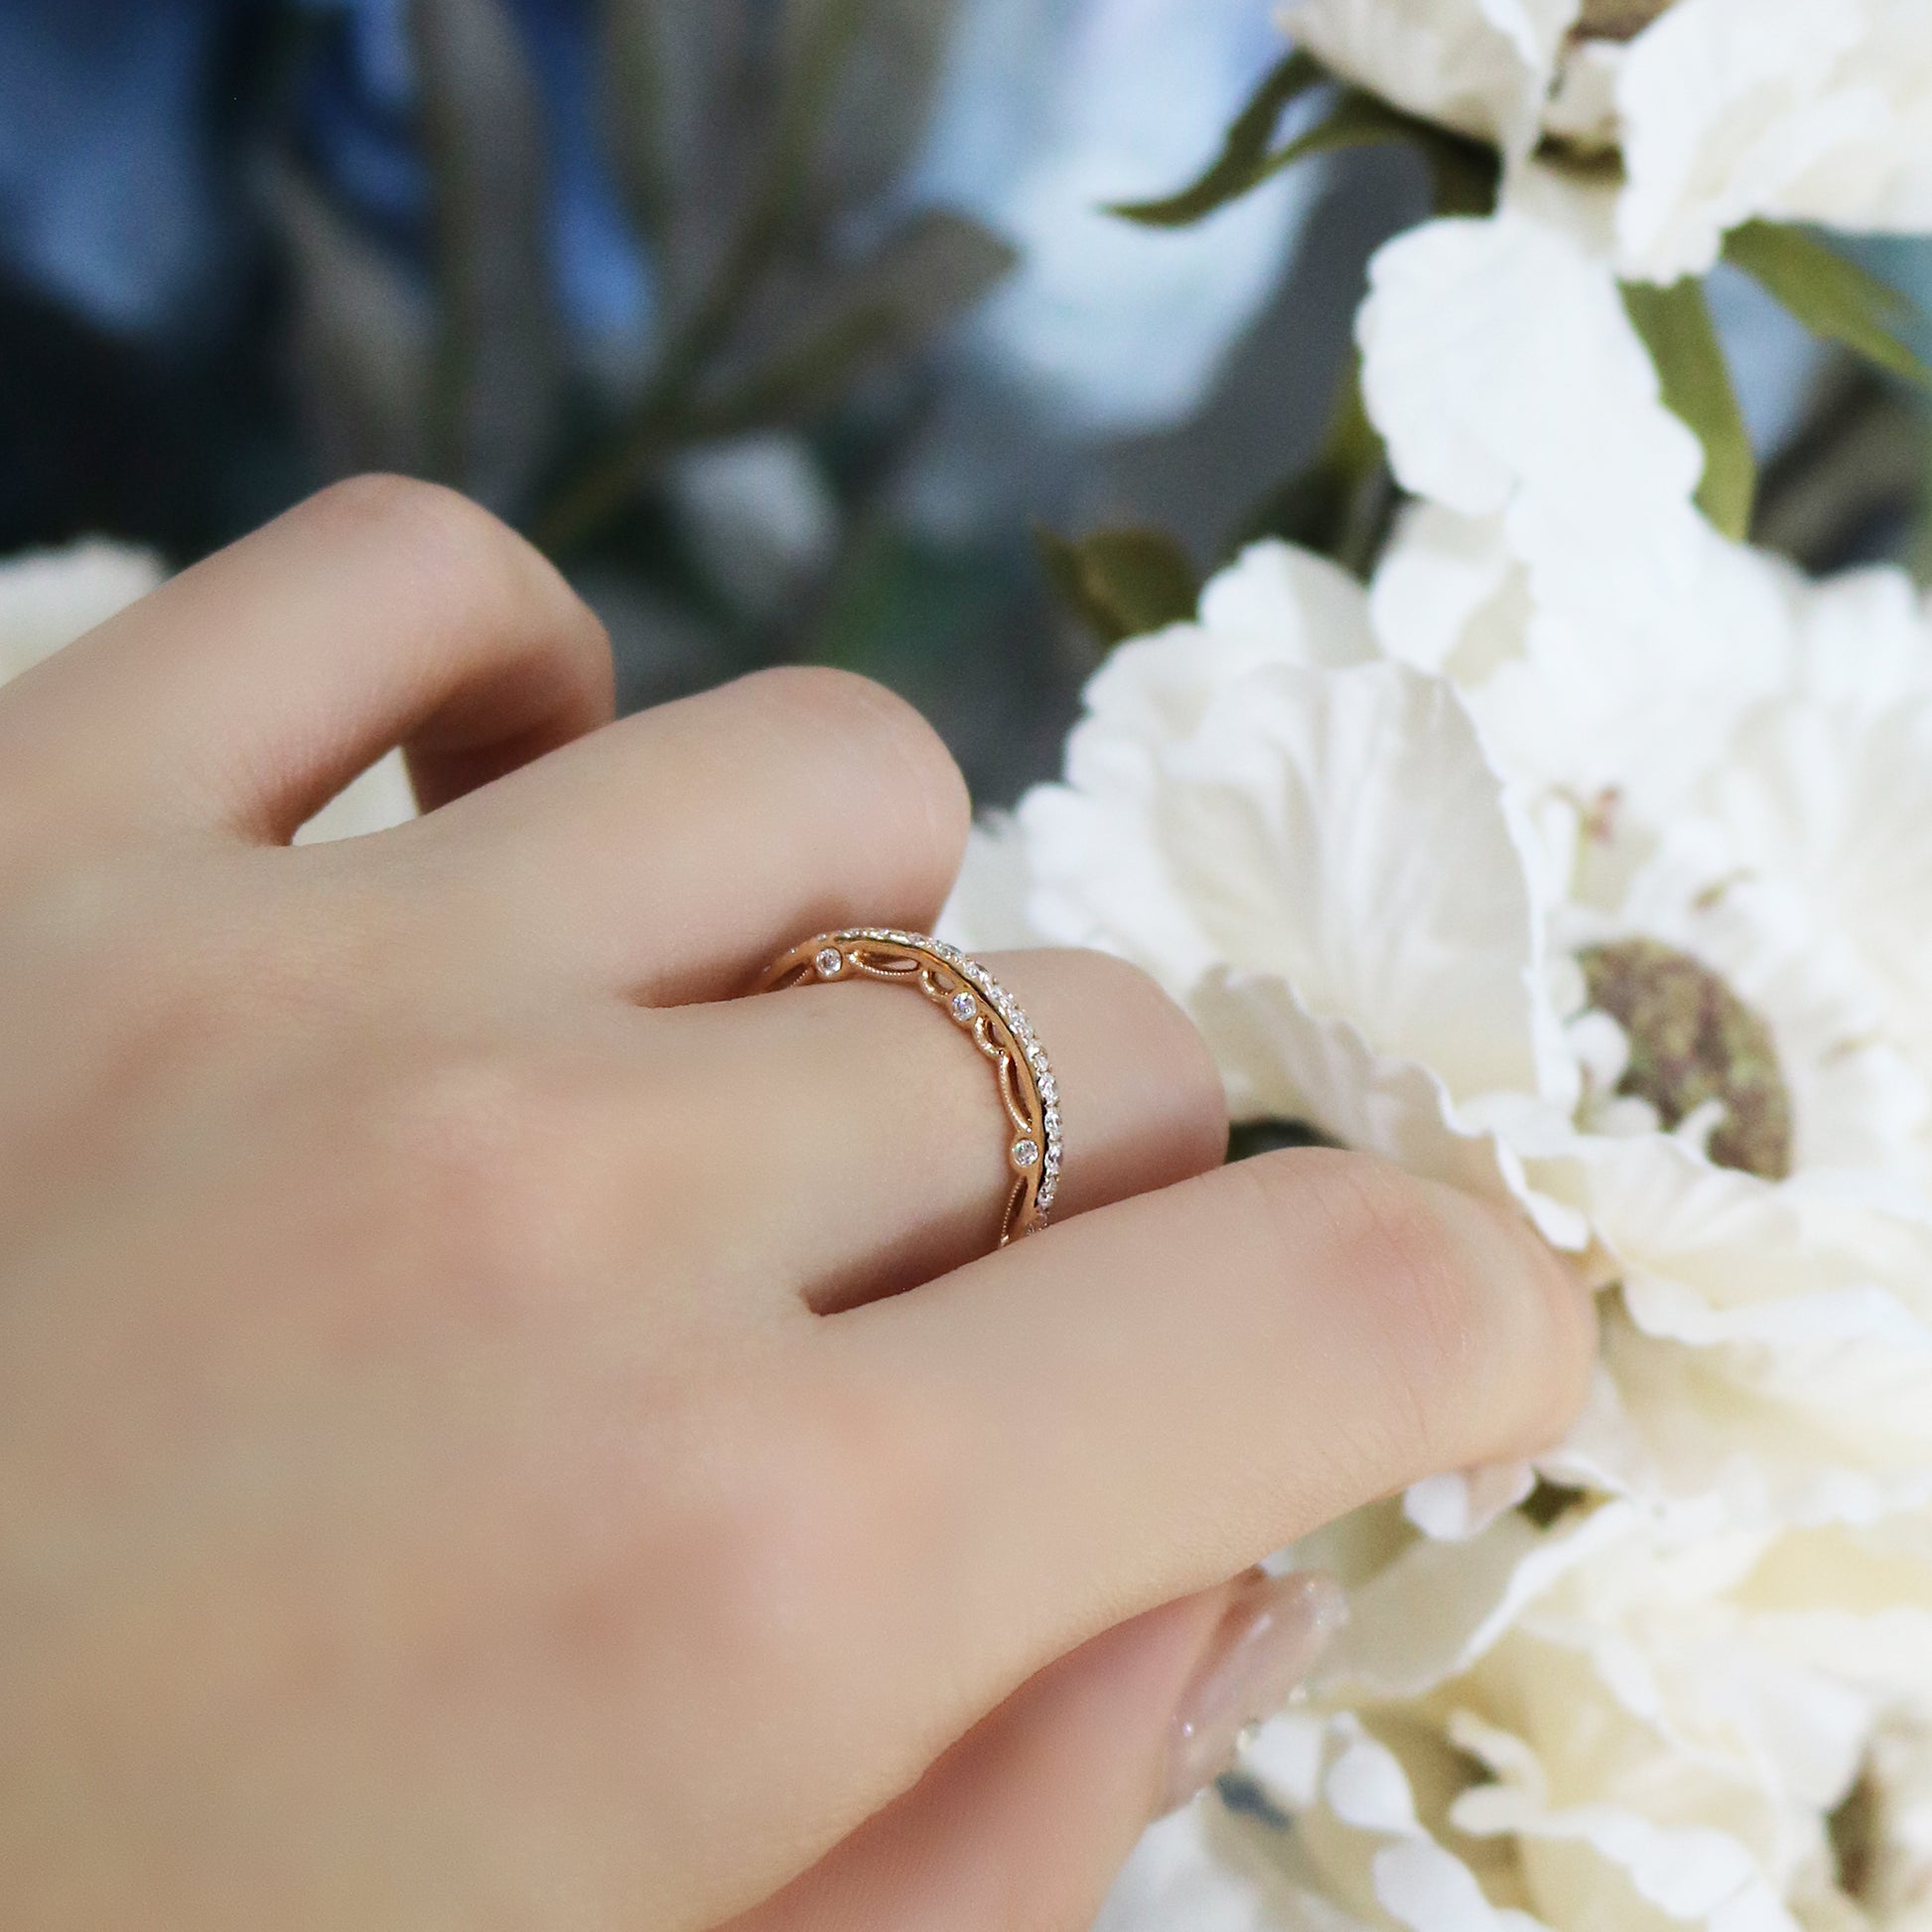 18k玫瑰金三面鑽石蕾絲戒指側面 18k Rose Gold 3-Sided Lace Eternity Diamond Ring on side view